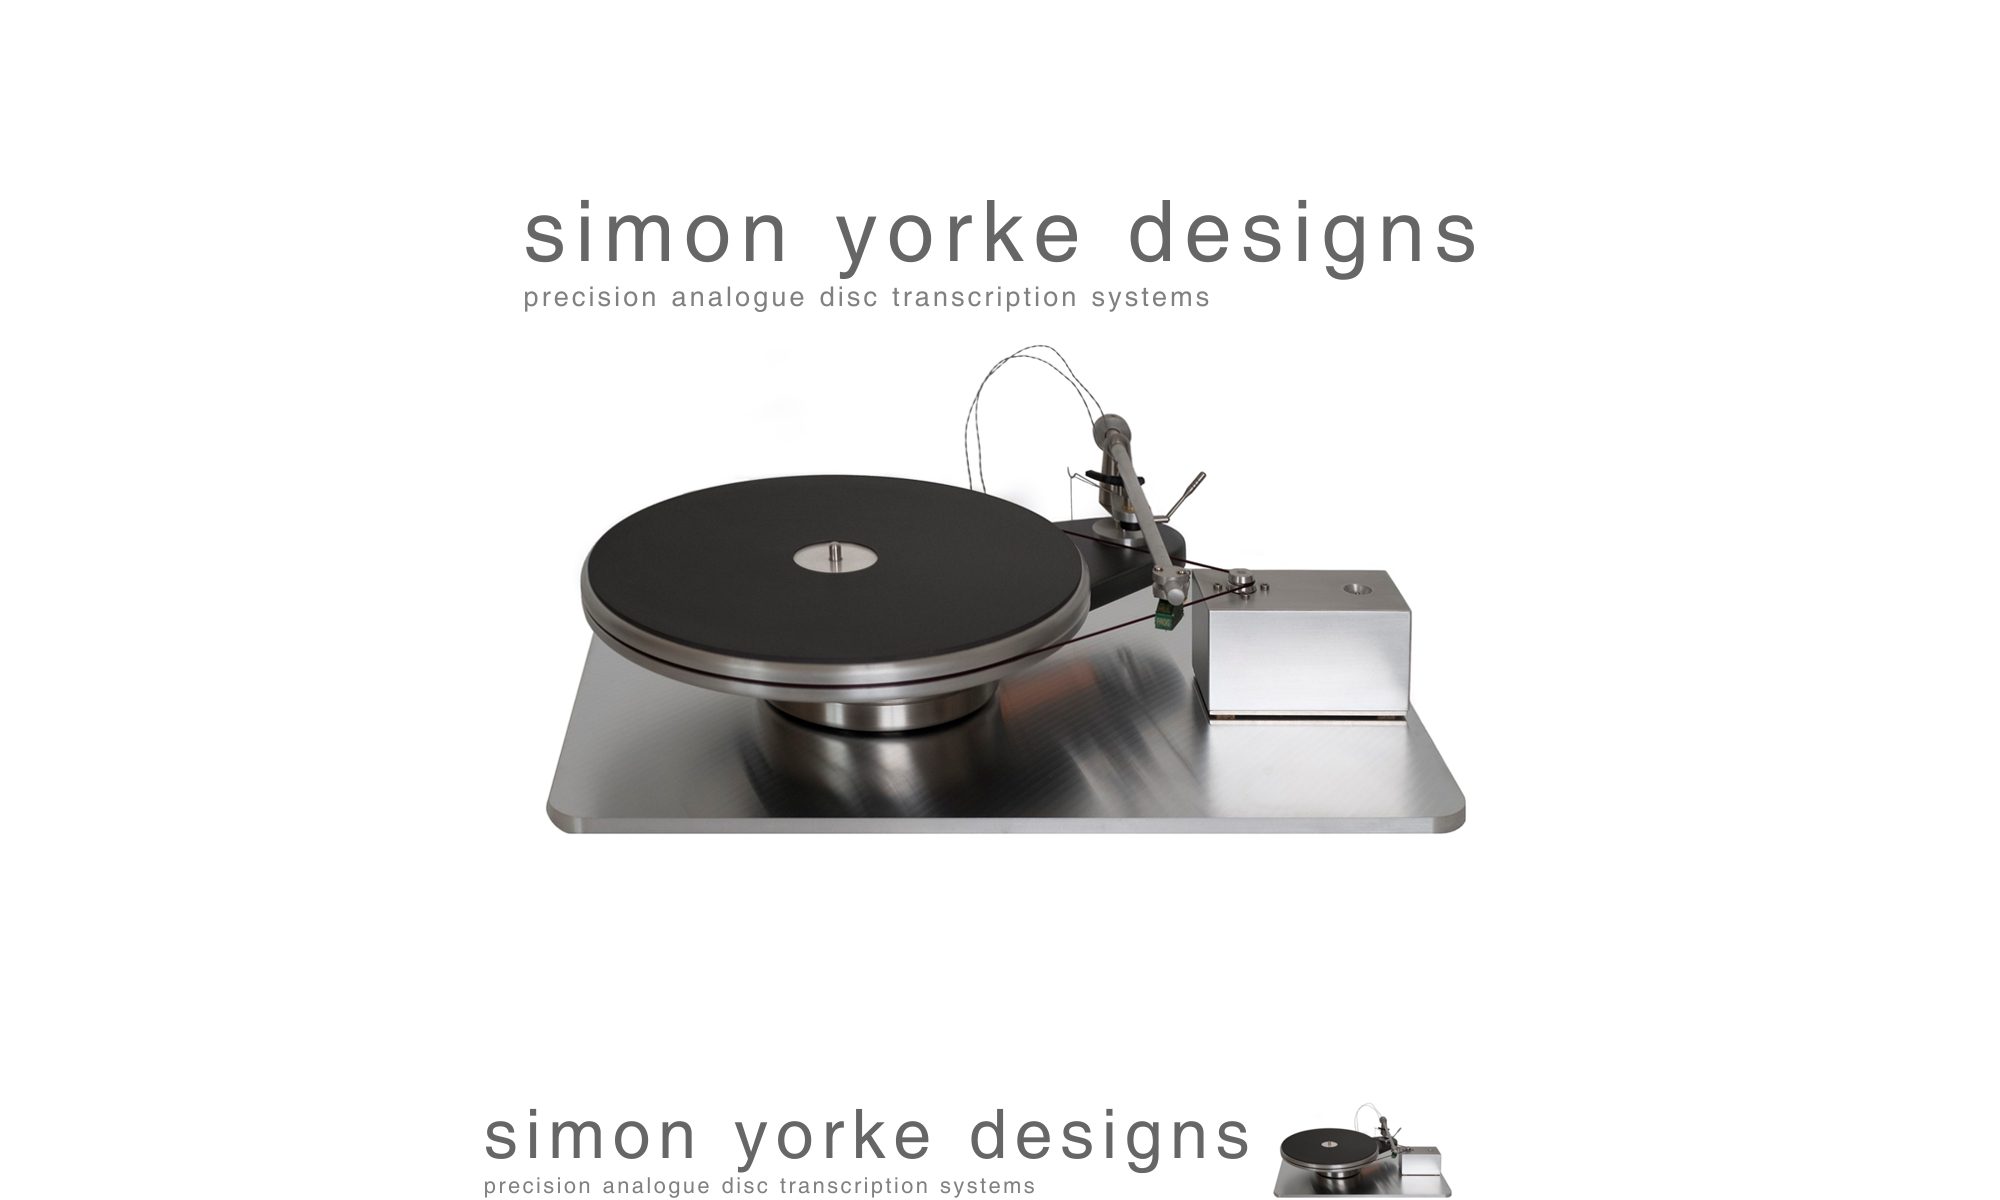 Simon Yorke Designs